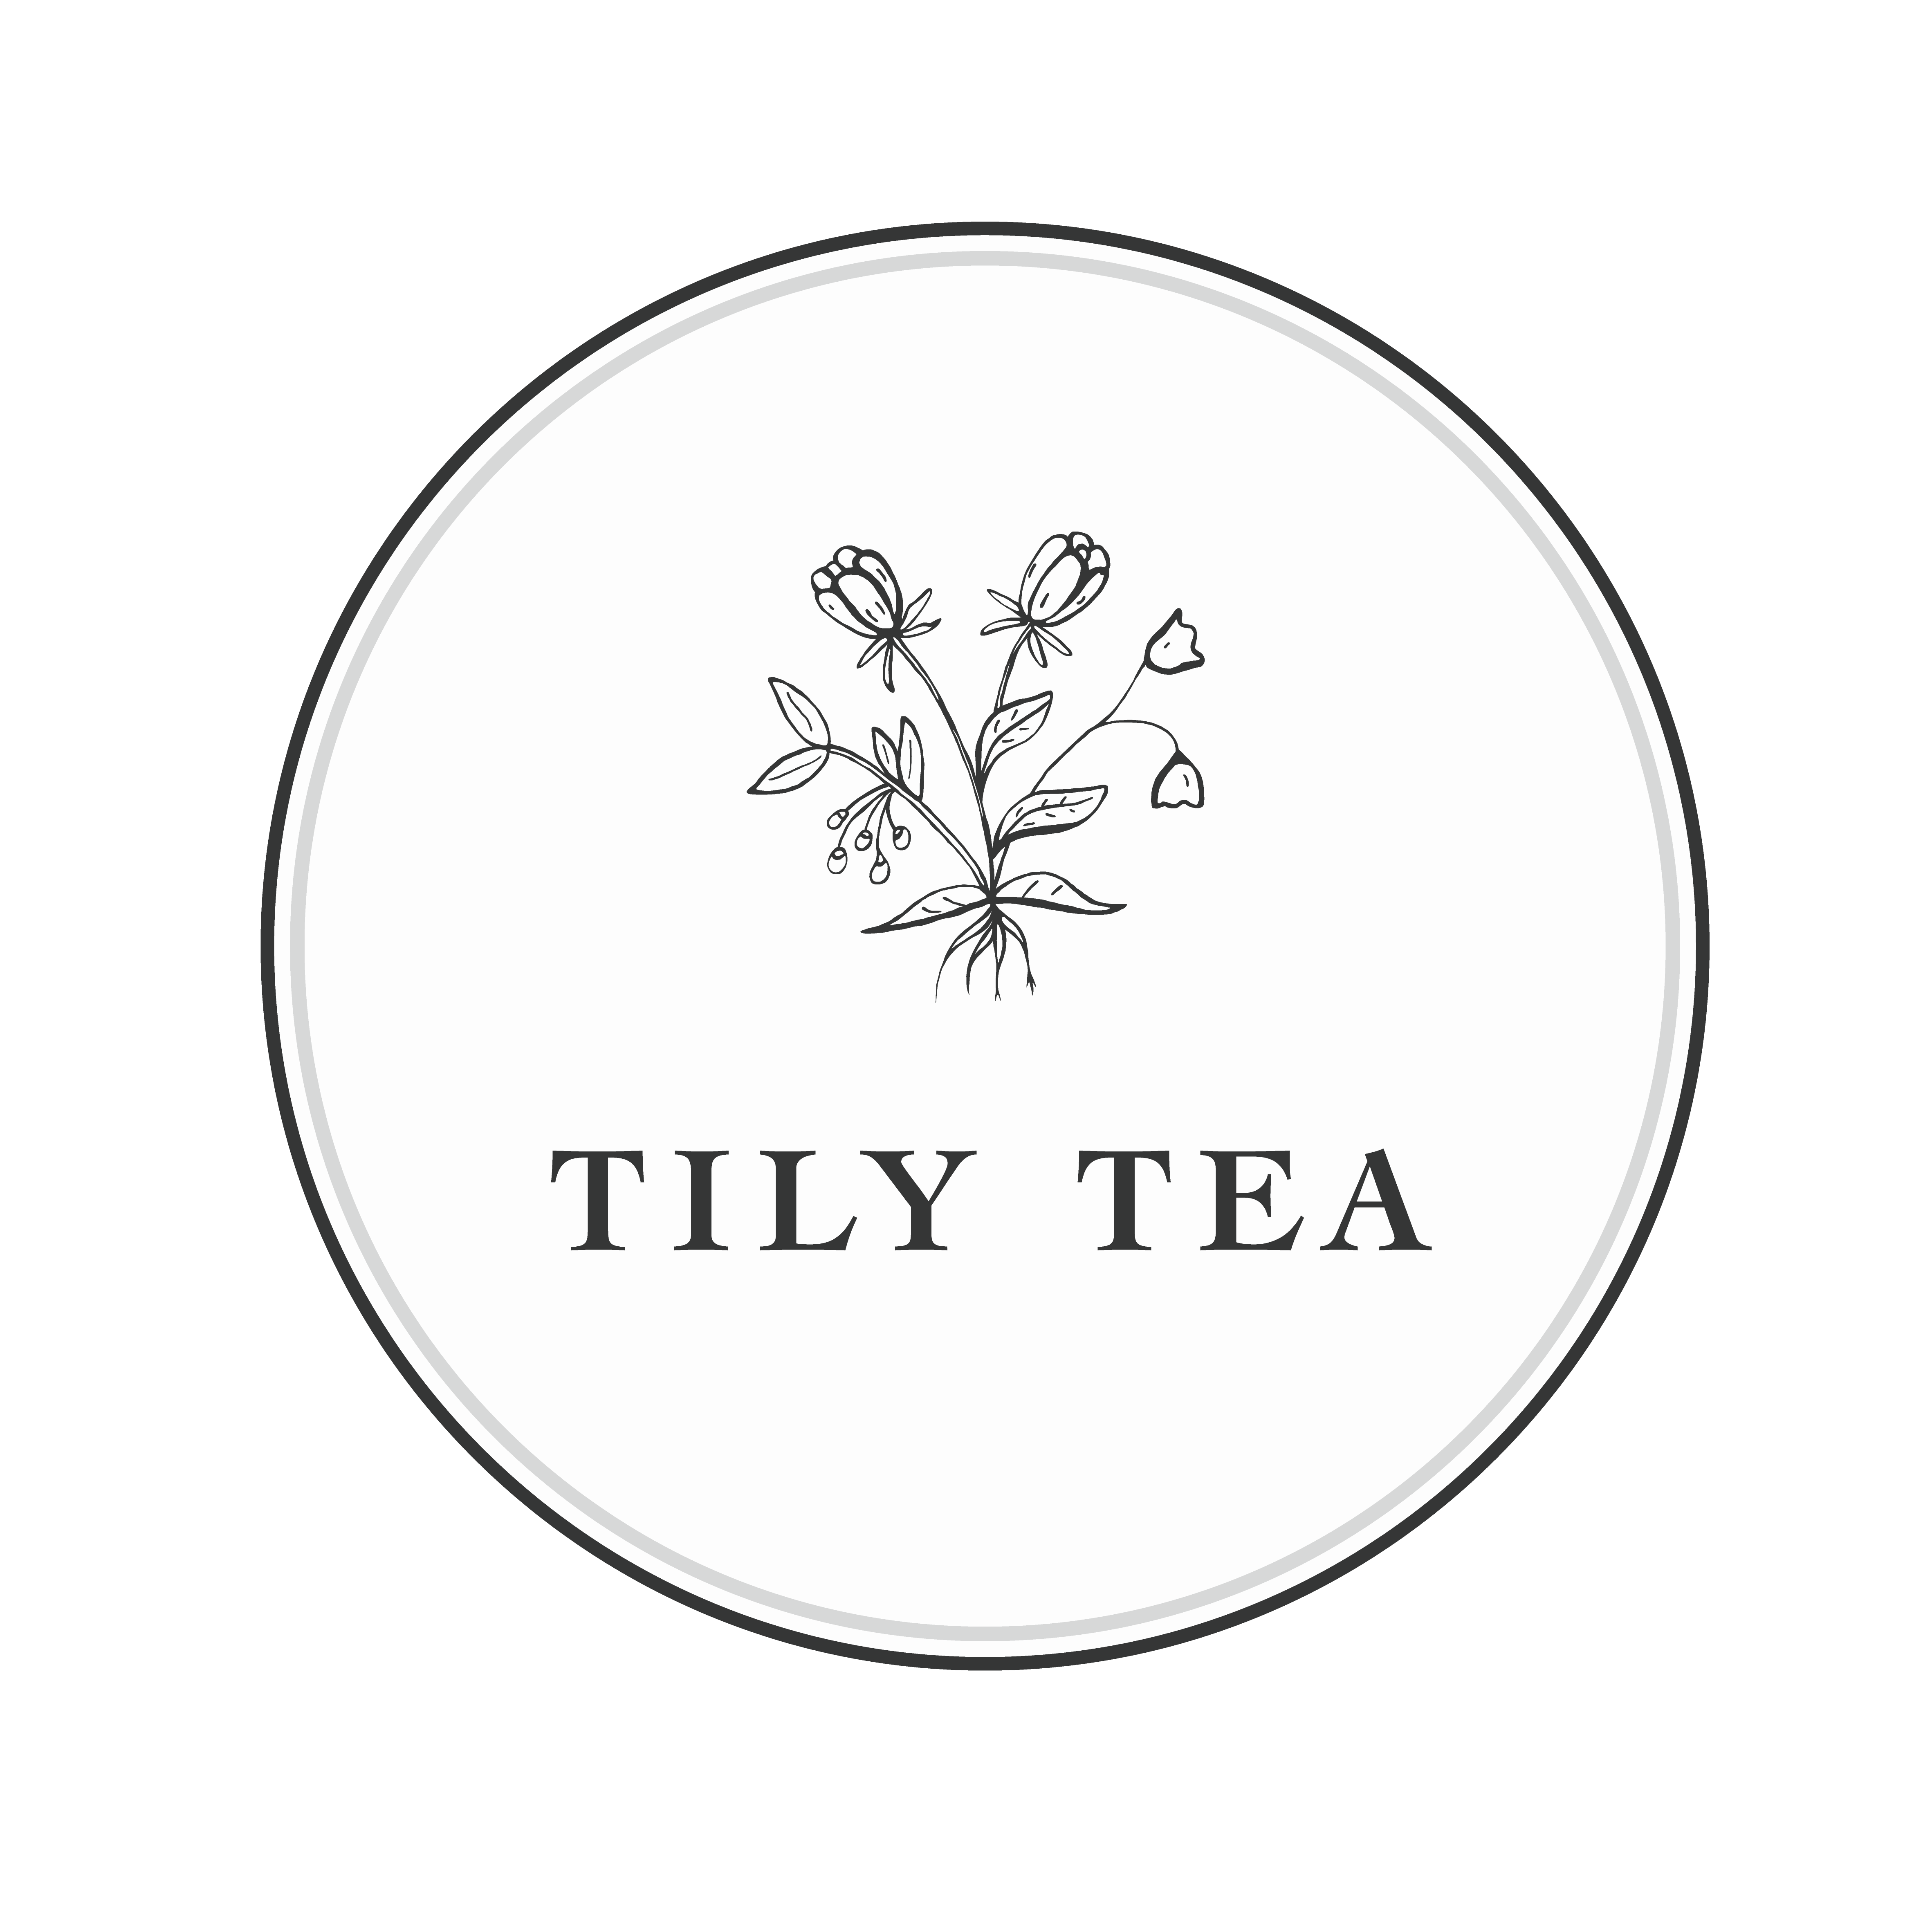 Tilly Tea